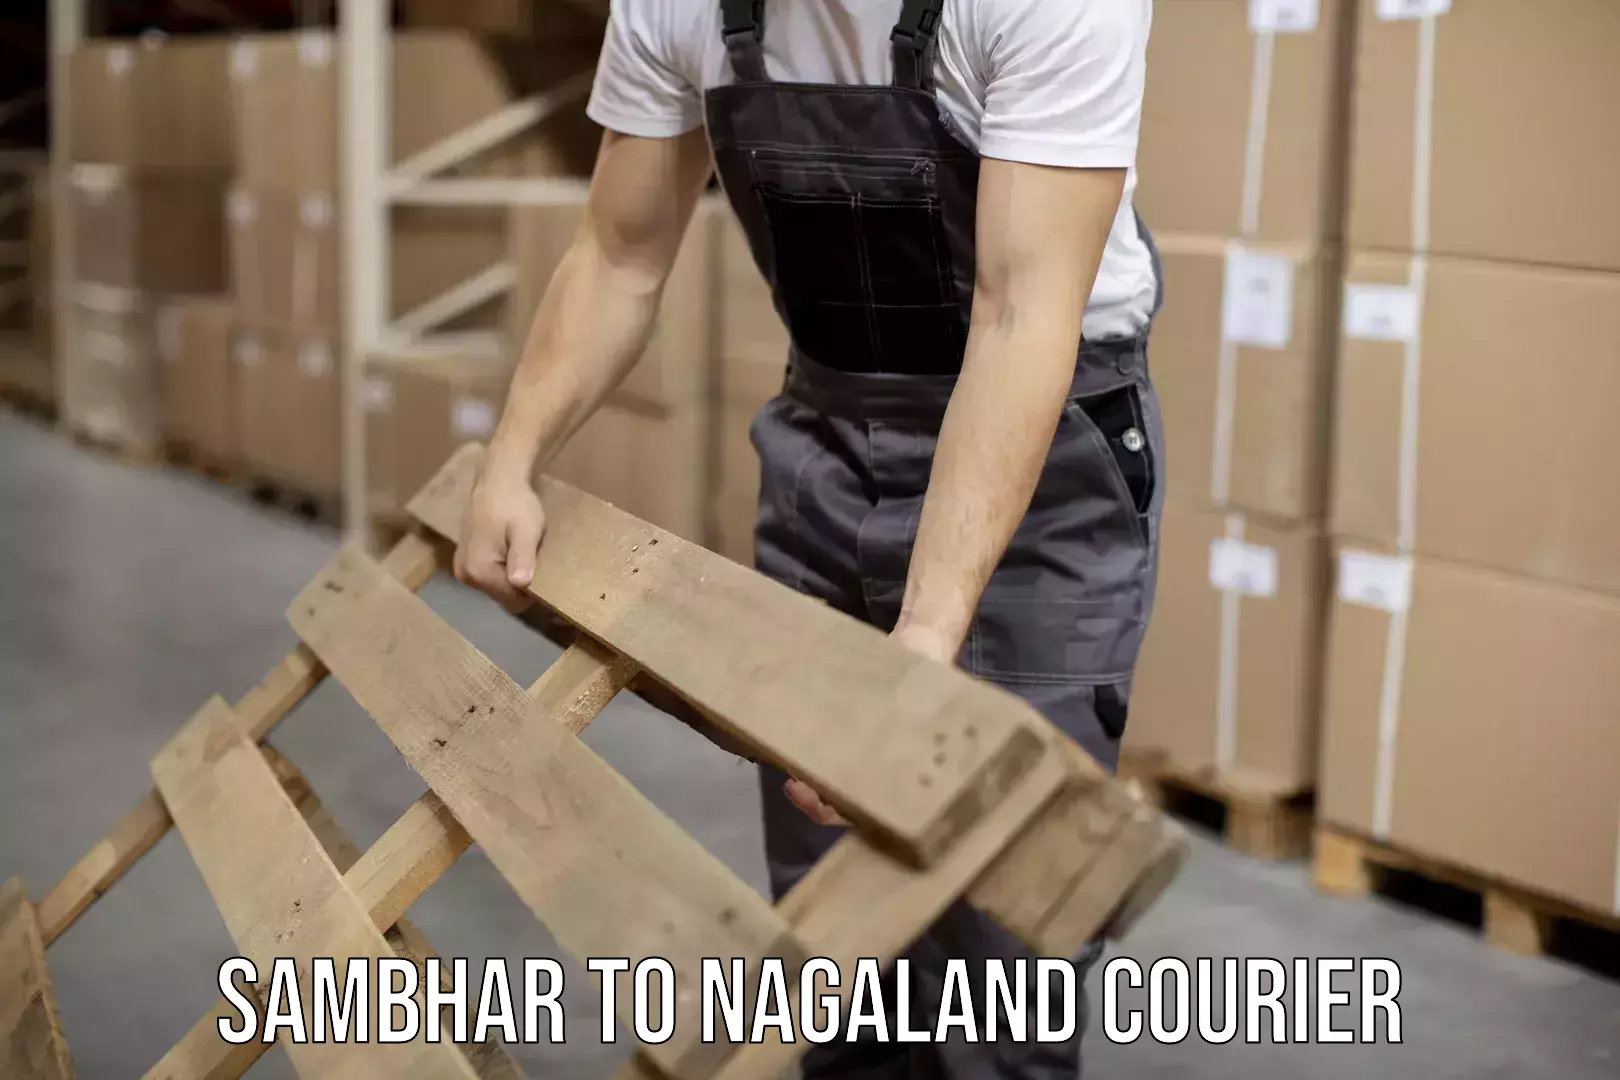 Nationwide courier service Sambhar to Nagaland